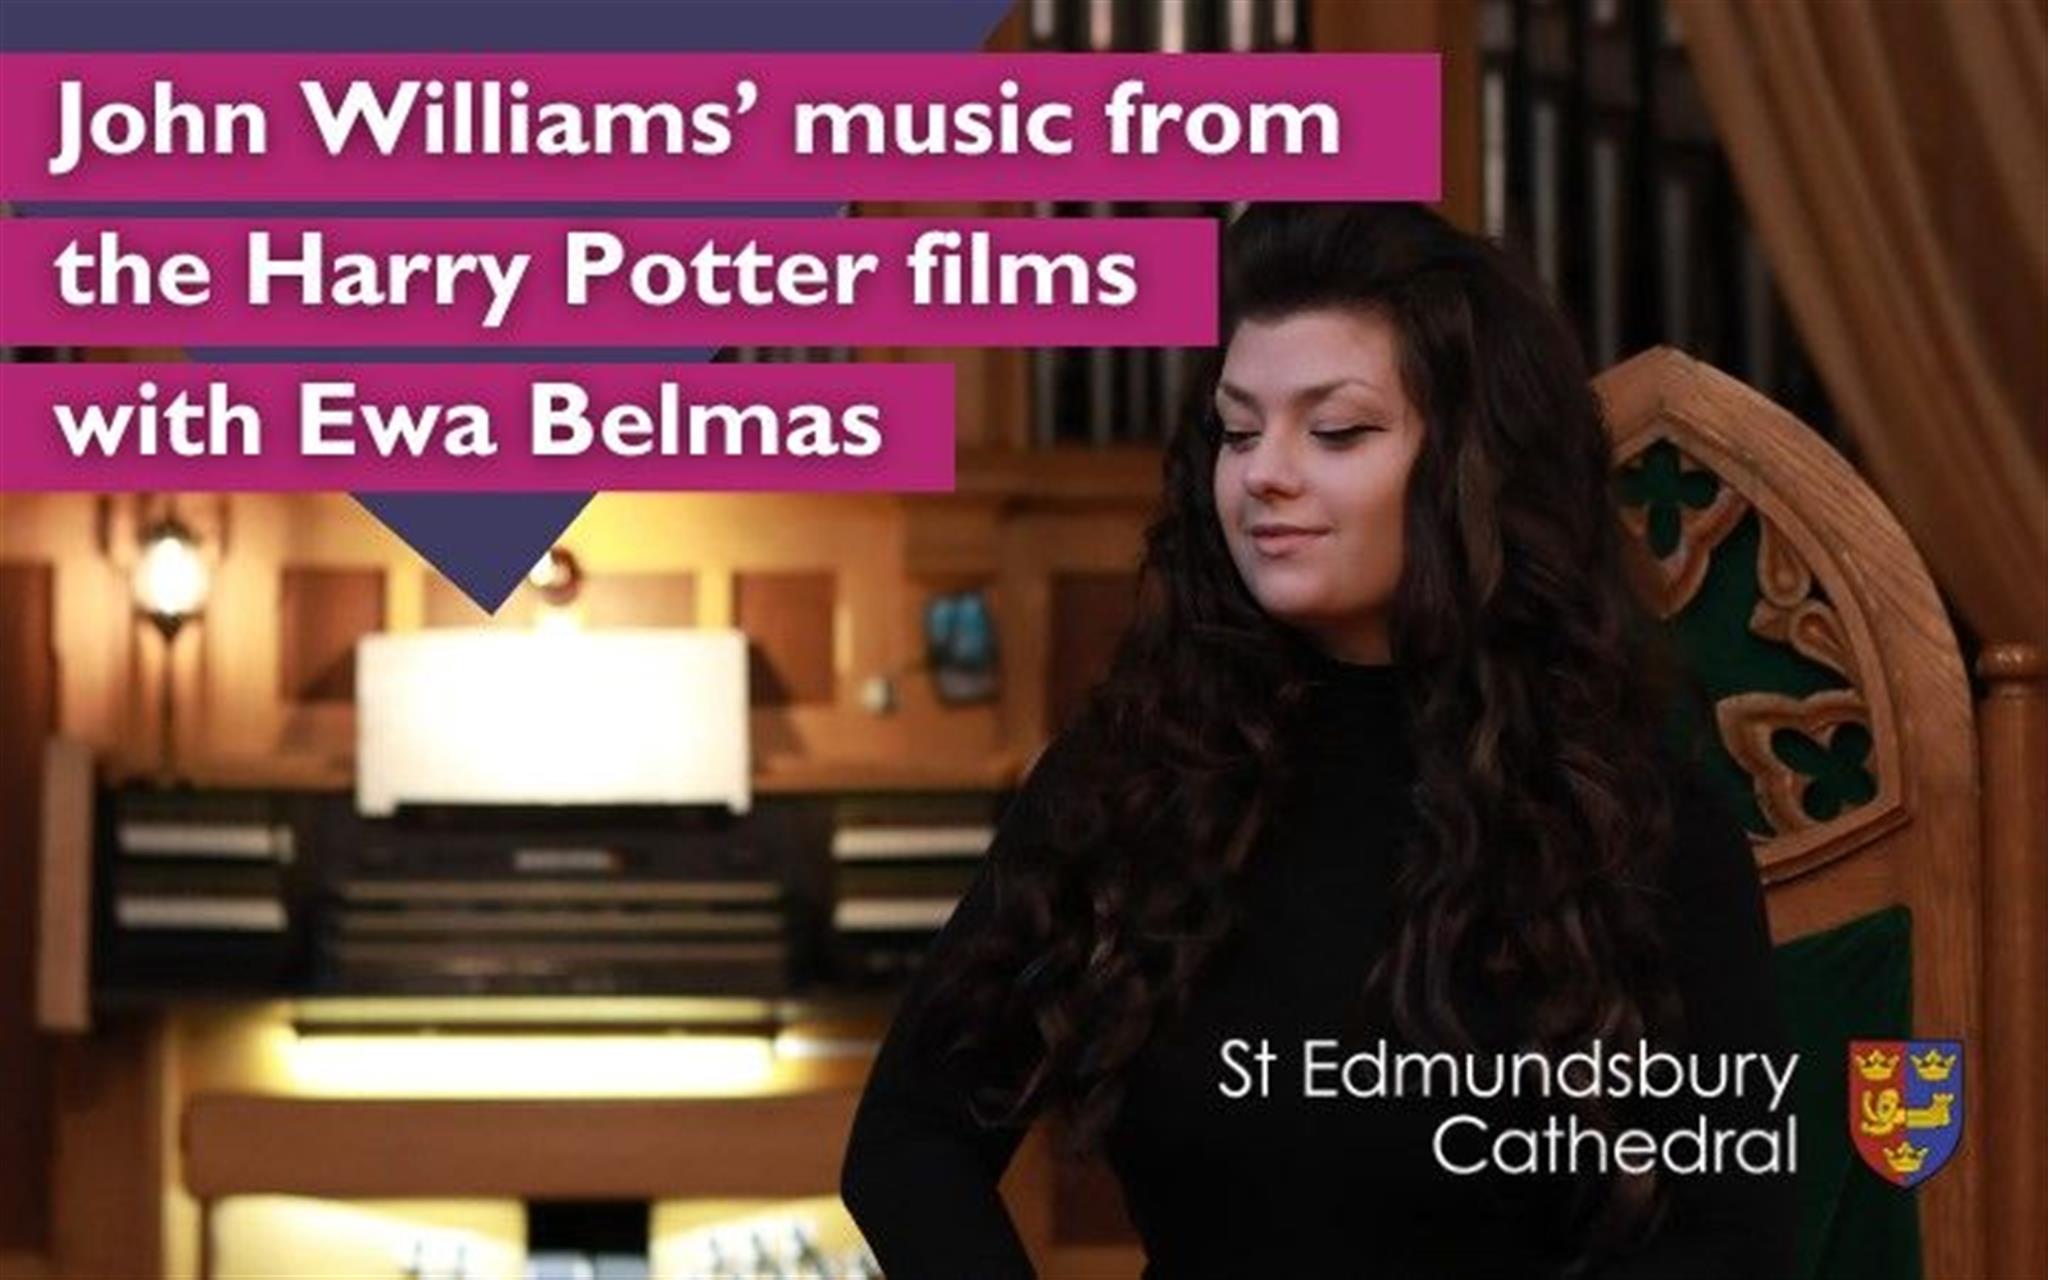 Summer Organ Festival: John Williams' Music from the Harry Potter Films with Ewa Belmas